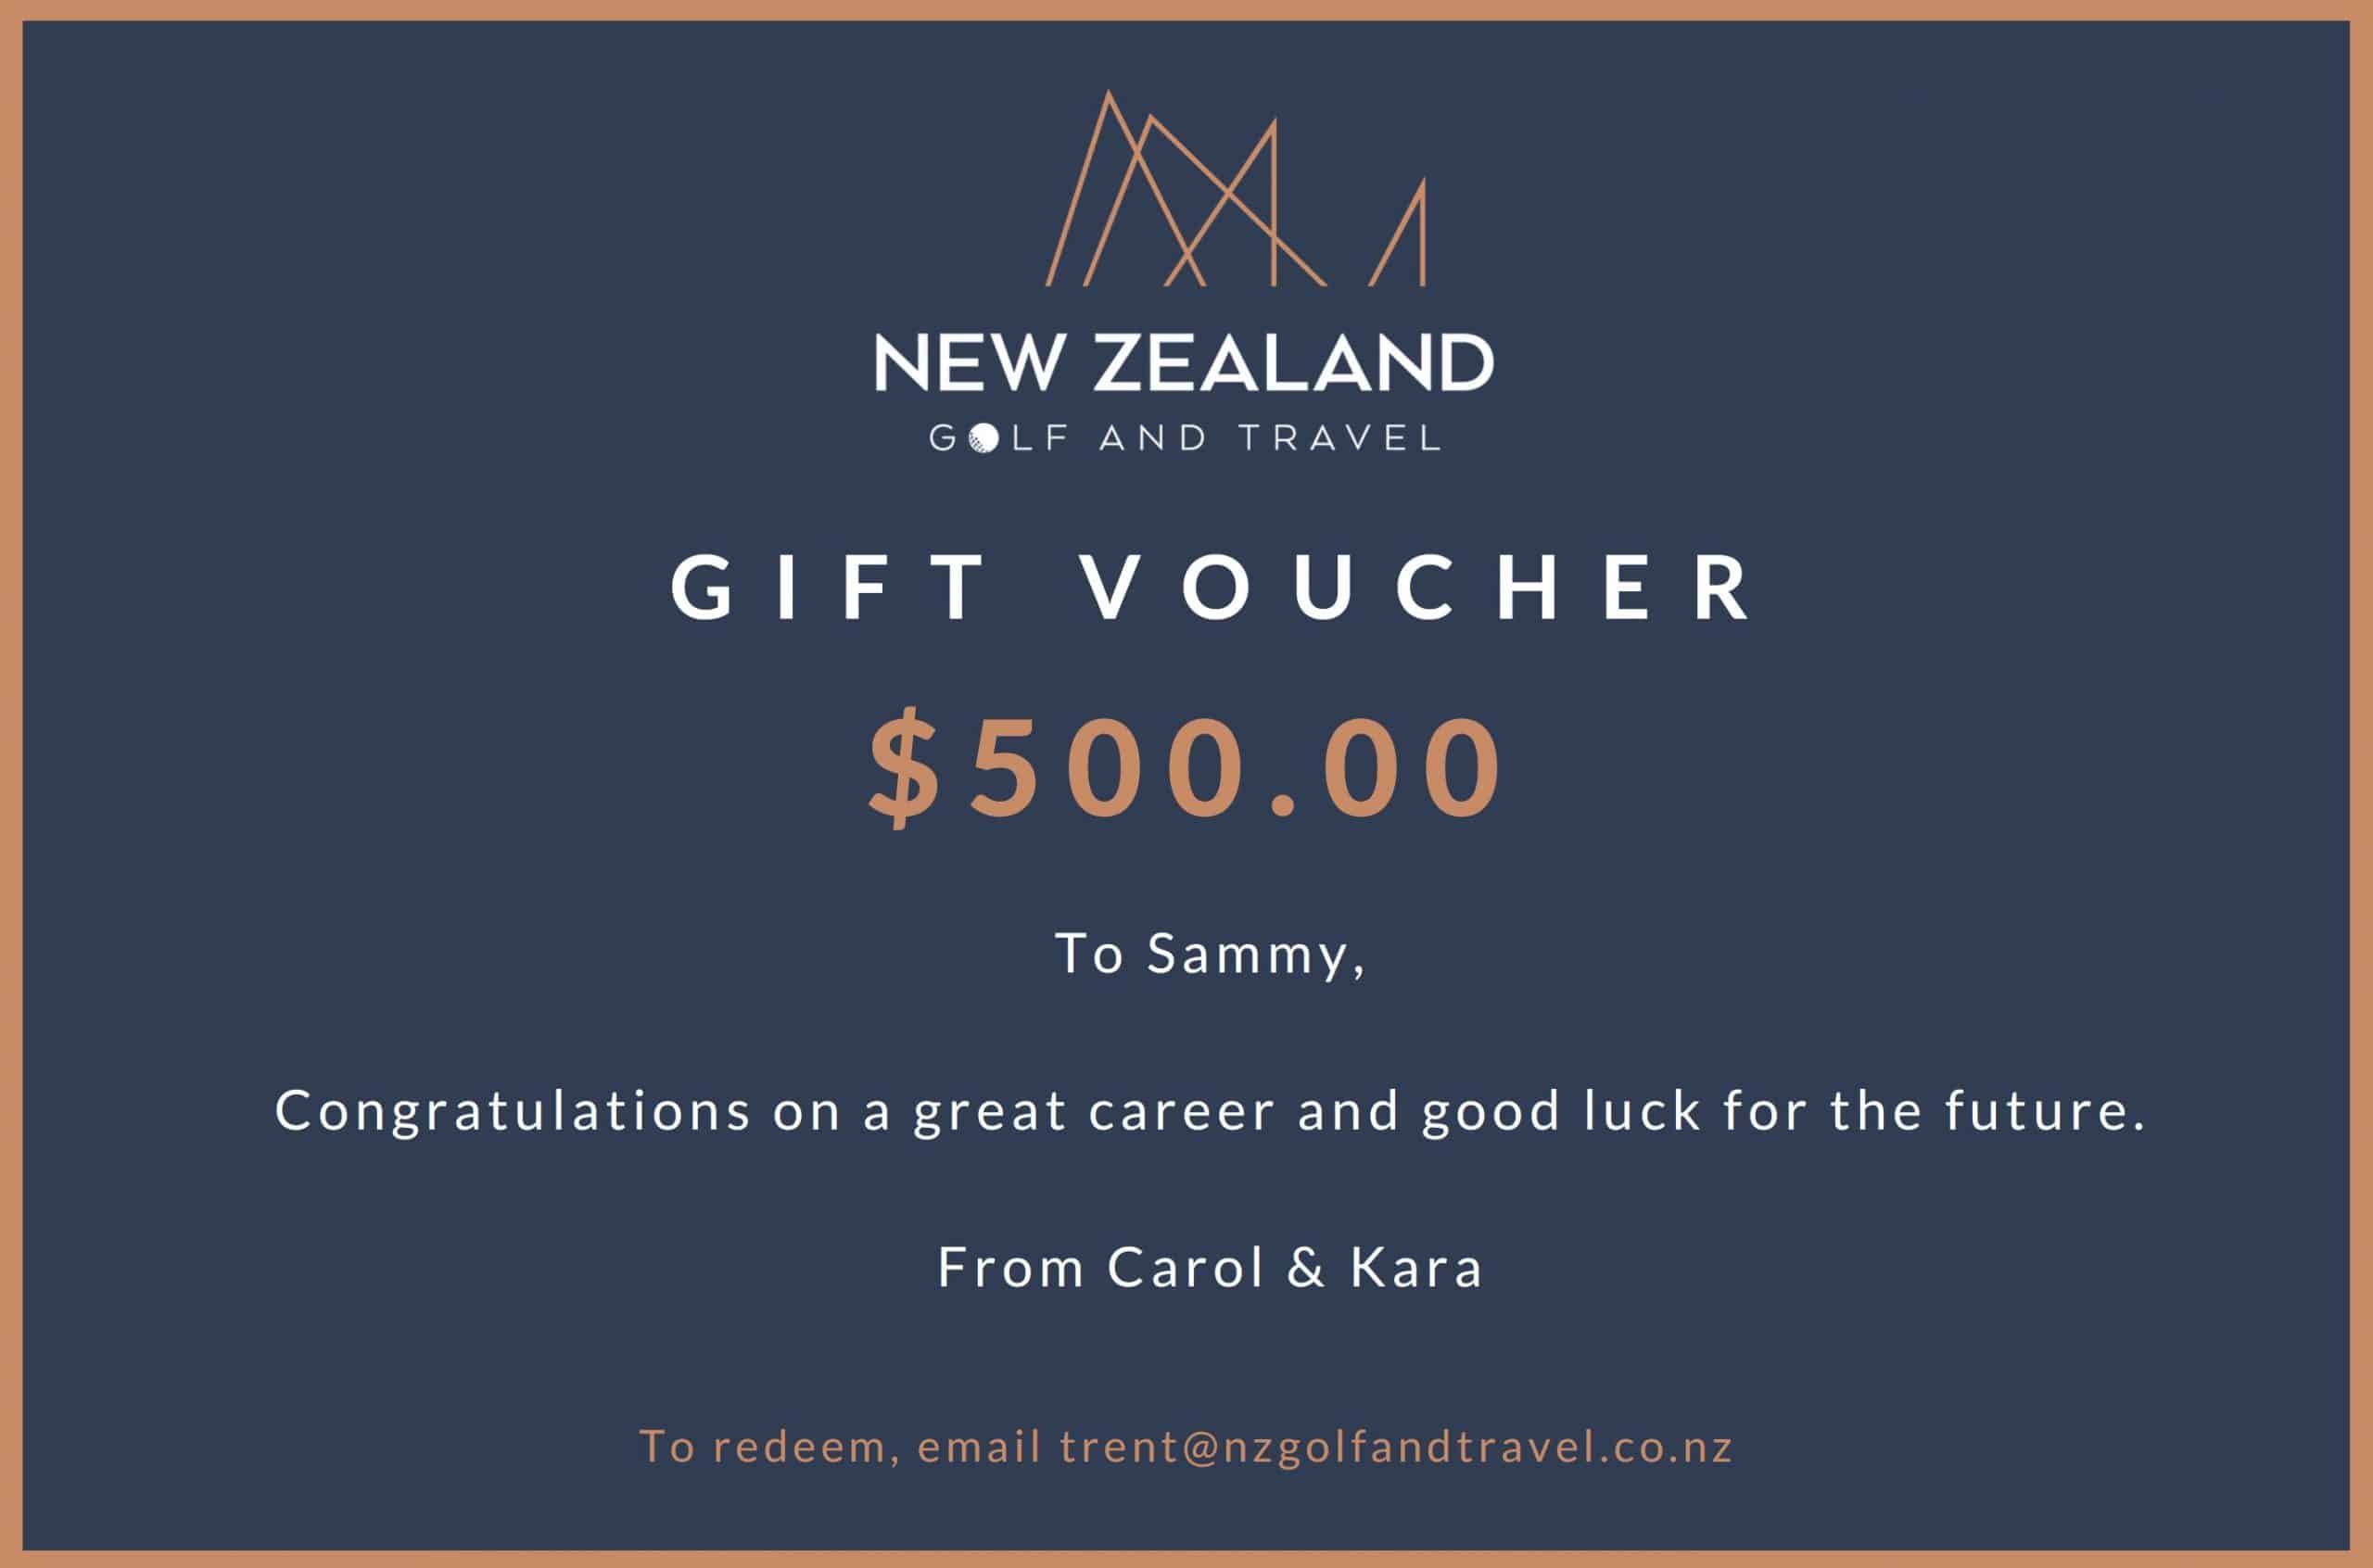 NZ Golf and Travel Gift Voucher